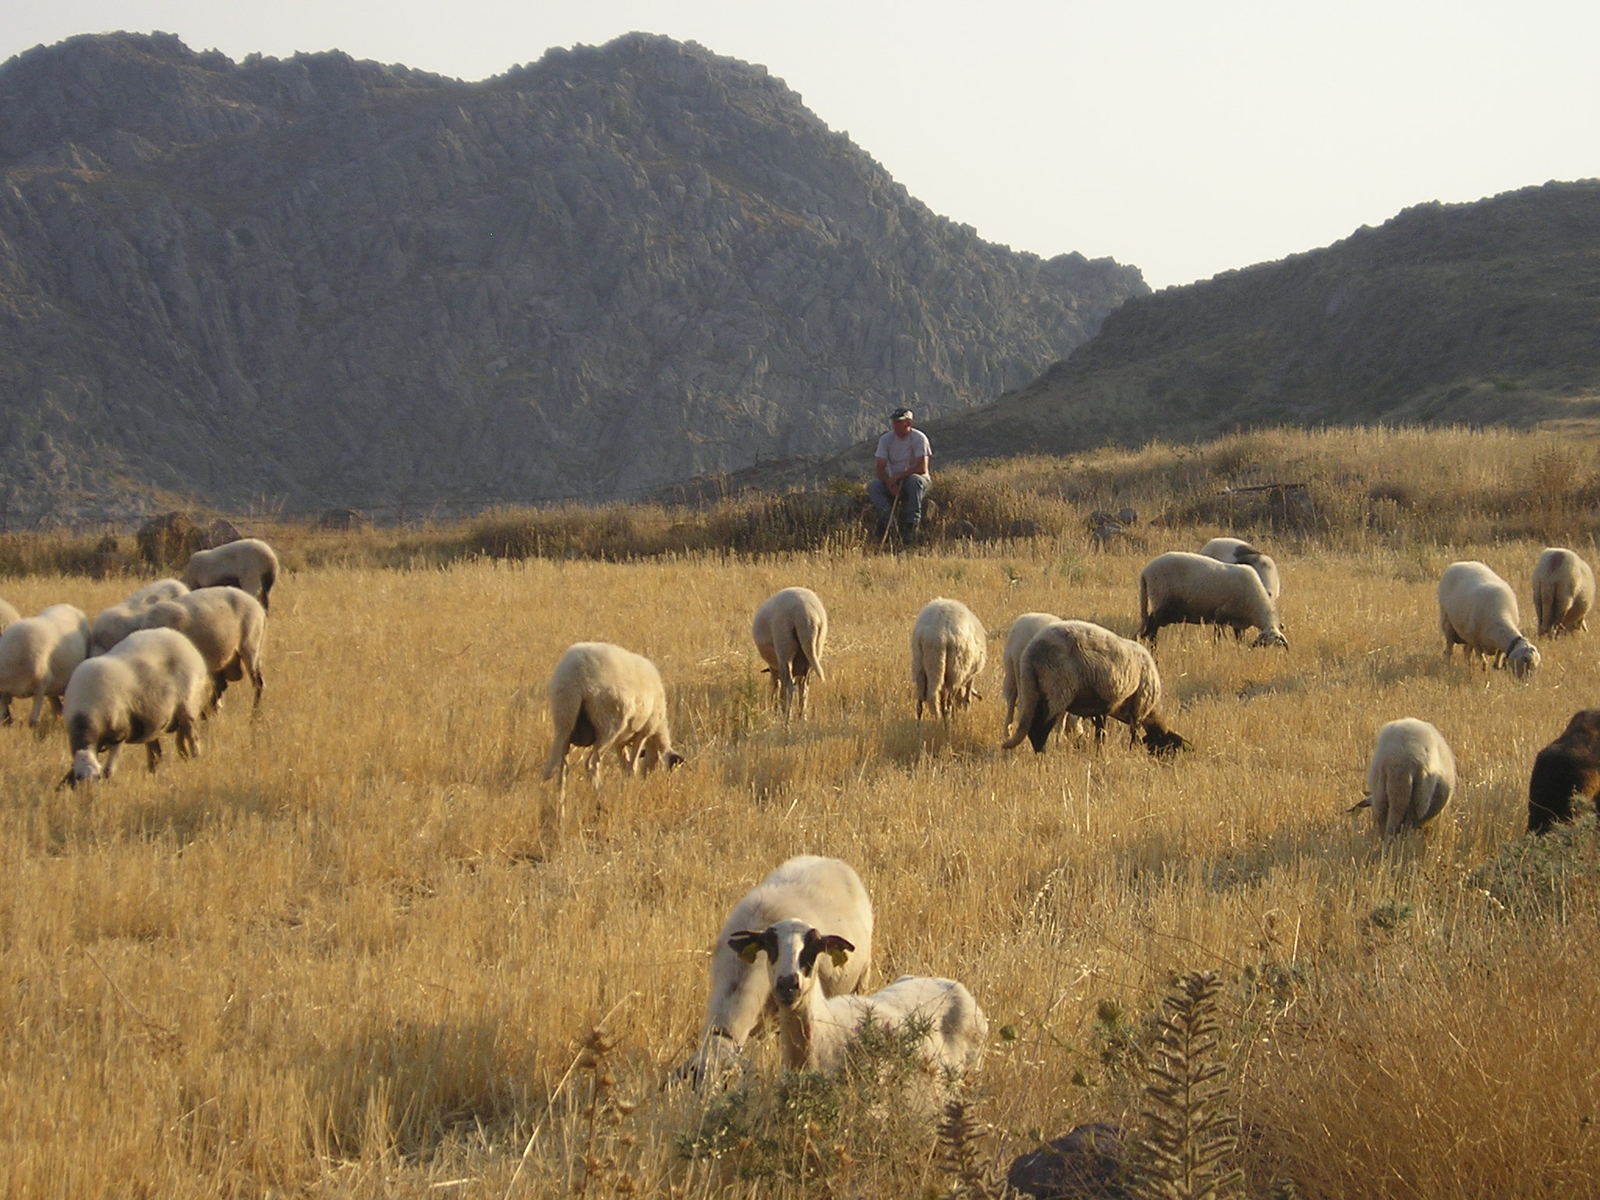 a herd of sheep grazing on a grass covered hillside